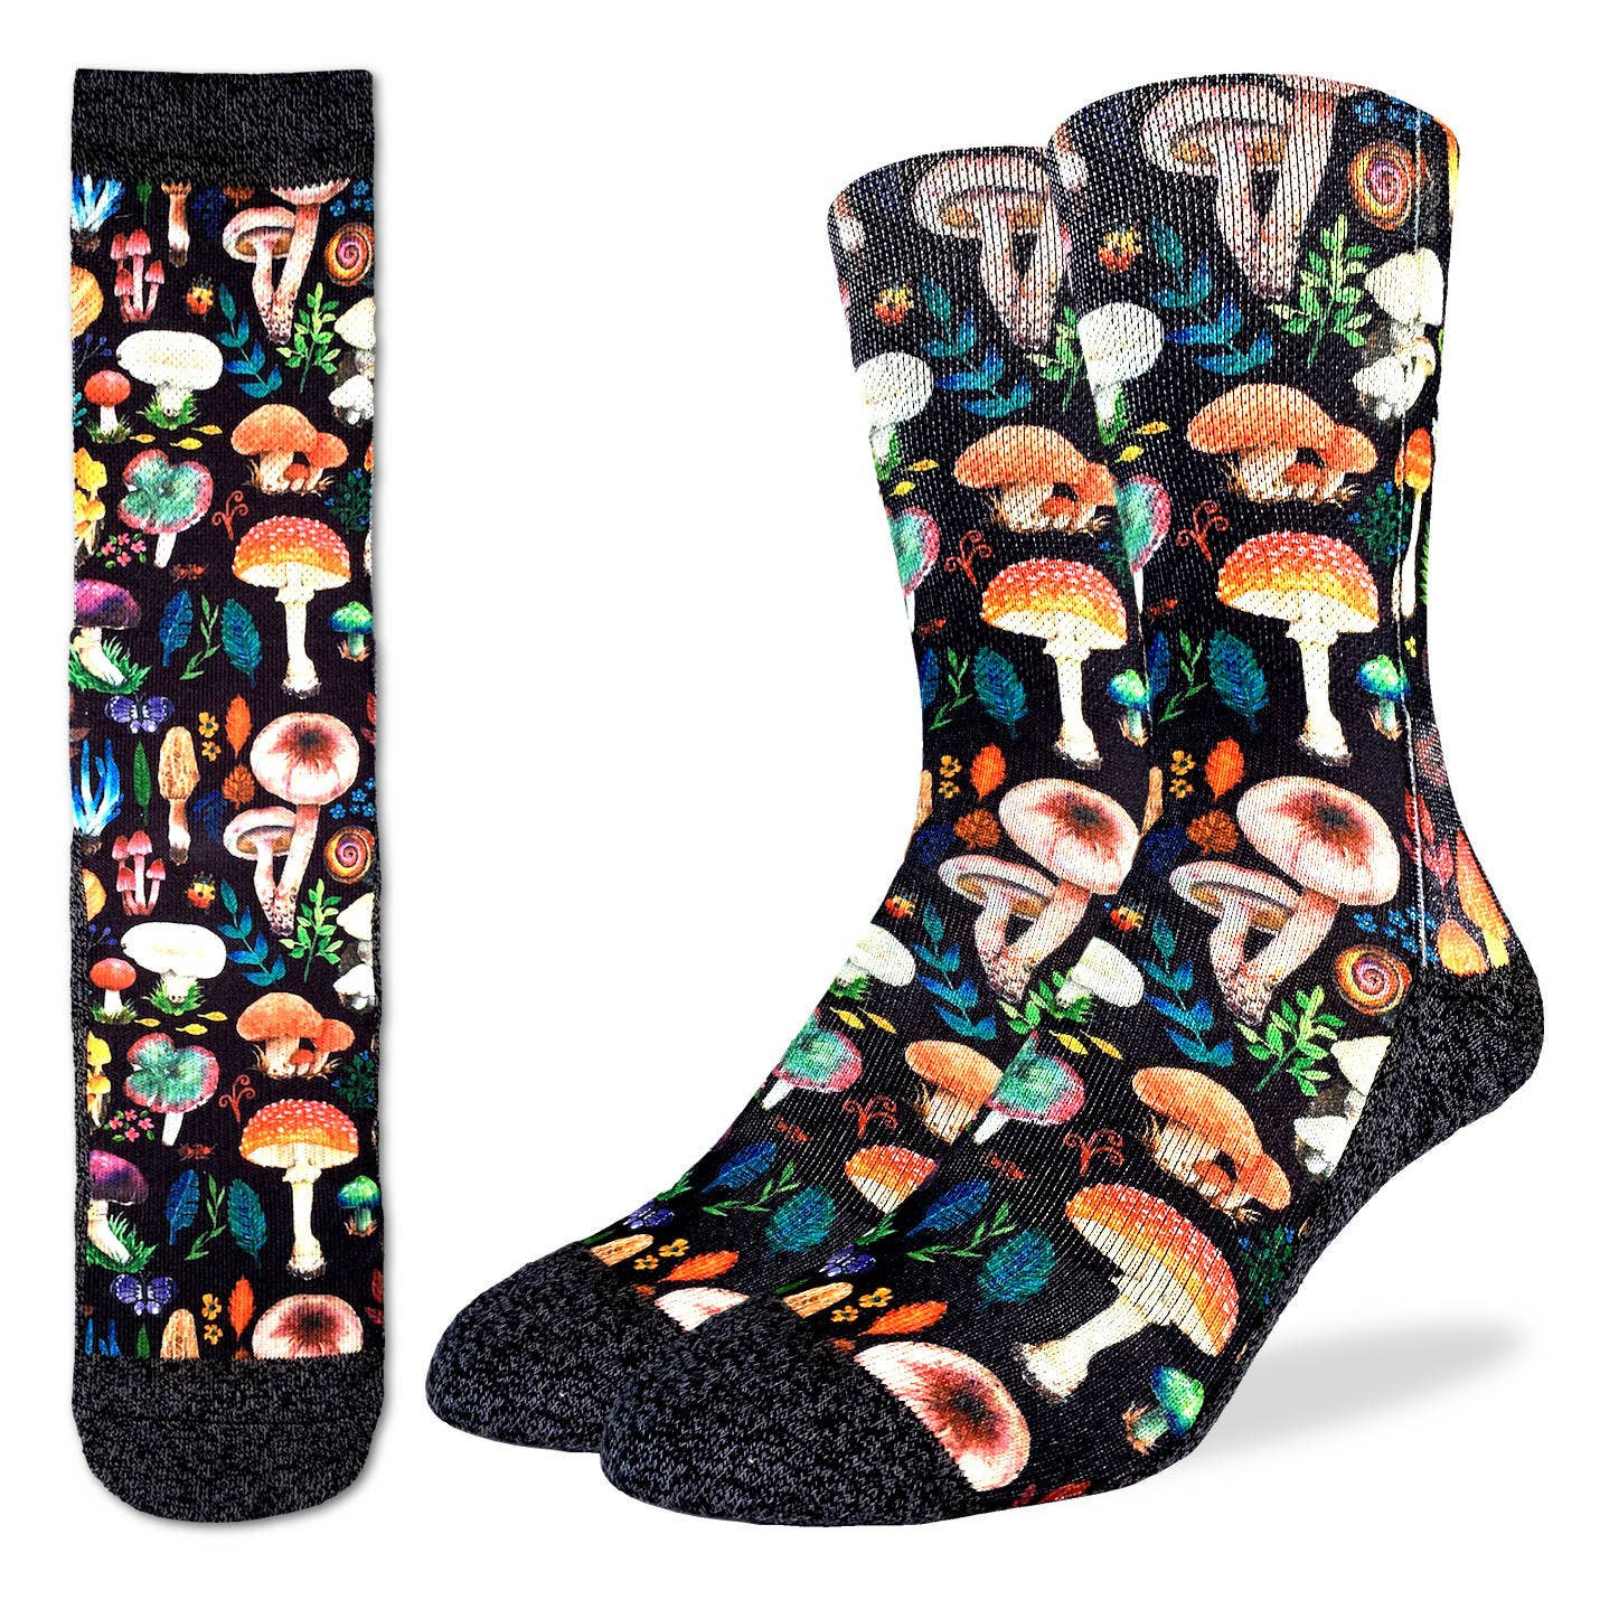 Good Luck Sock Mushroom men's socks featuring different types of mushrooms on black background on display